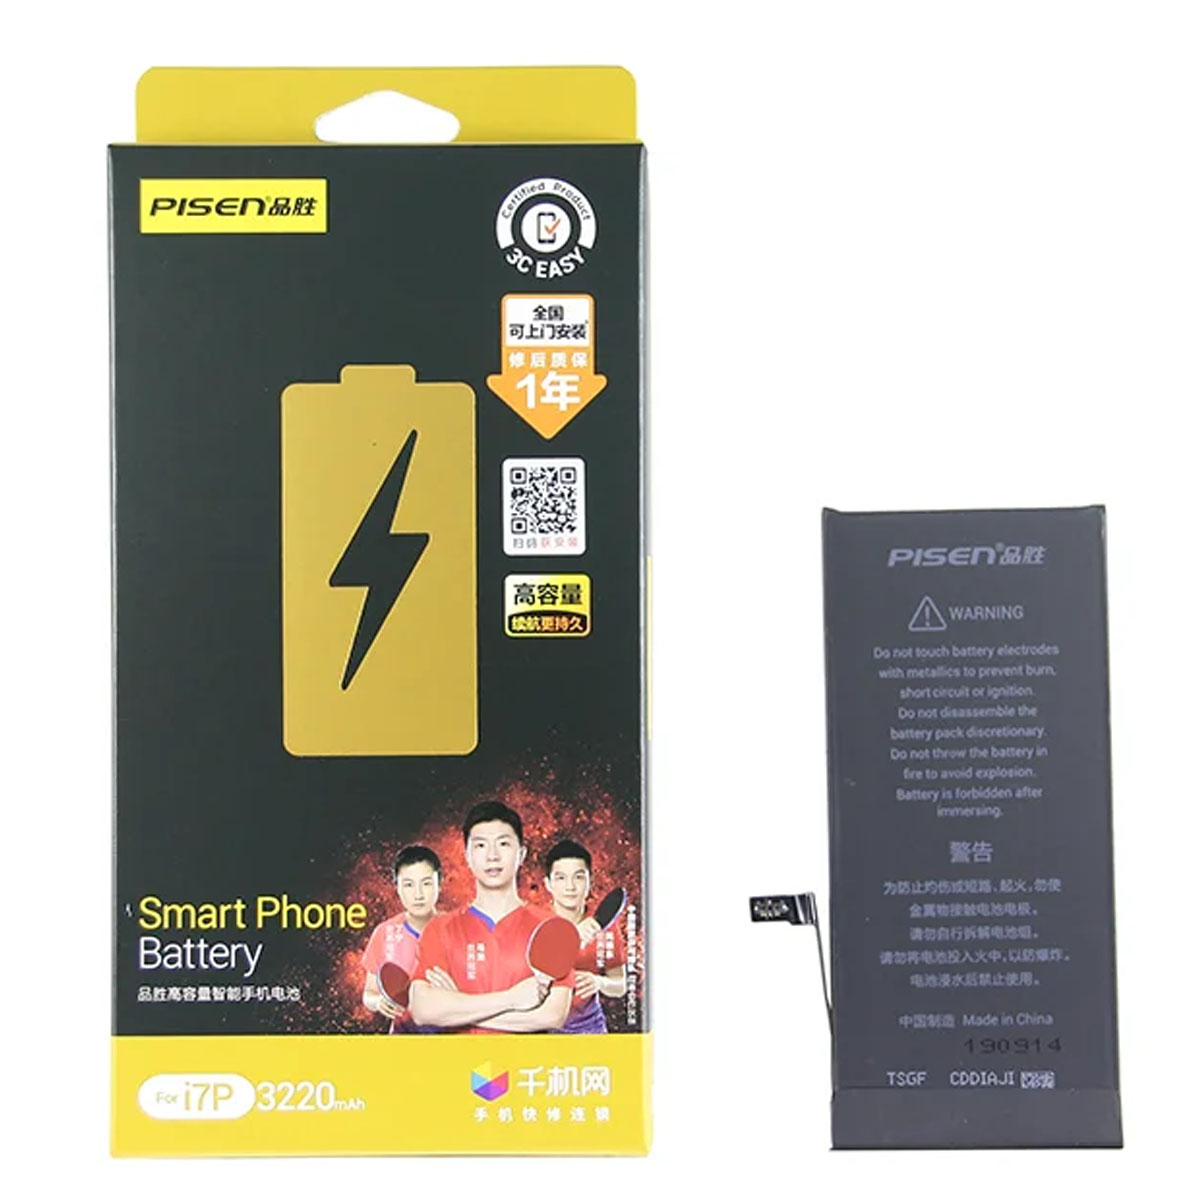 АКБ (Аккумулятор) PISEN для APPLE iPhone 7 Plus, 3220mAh, цвет черный